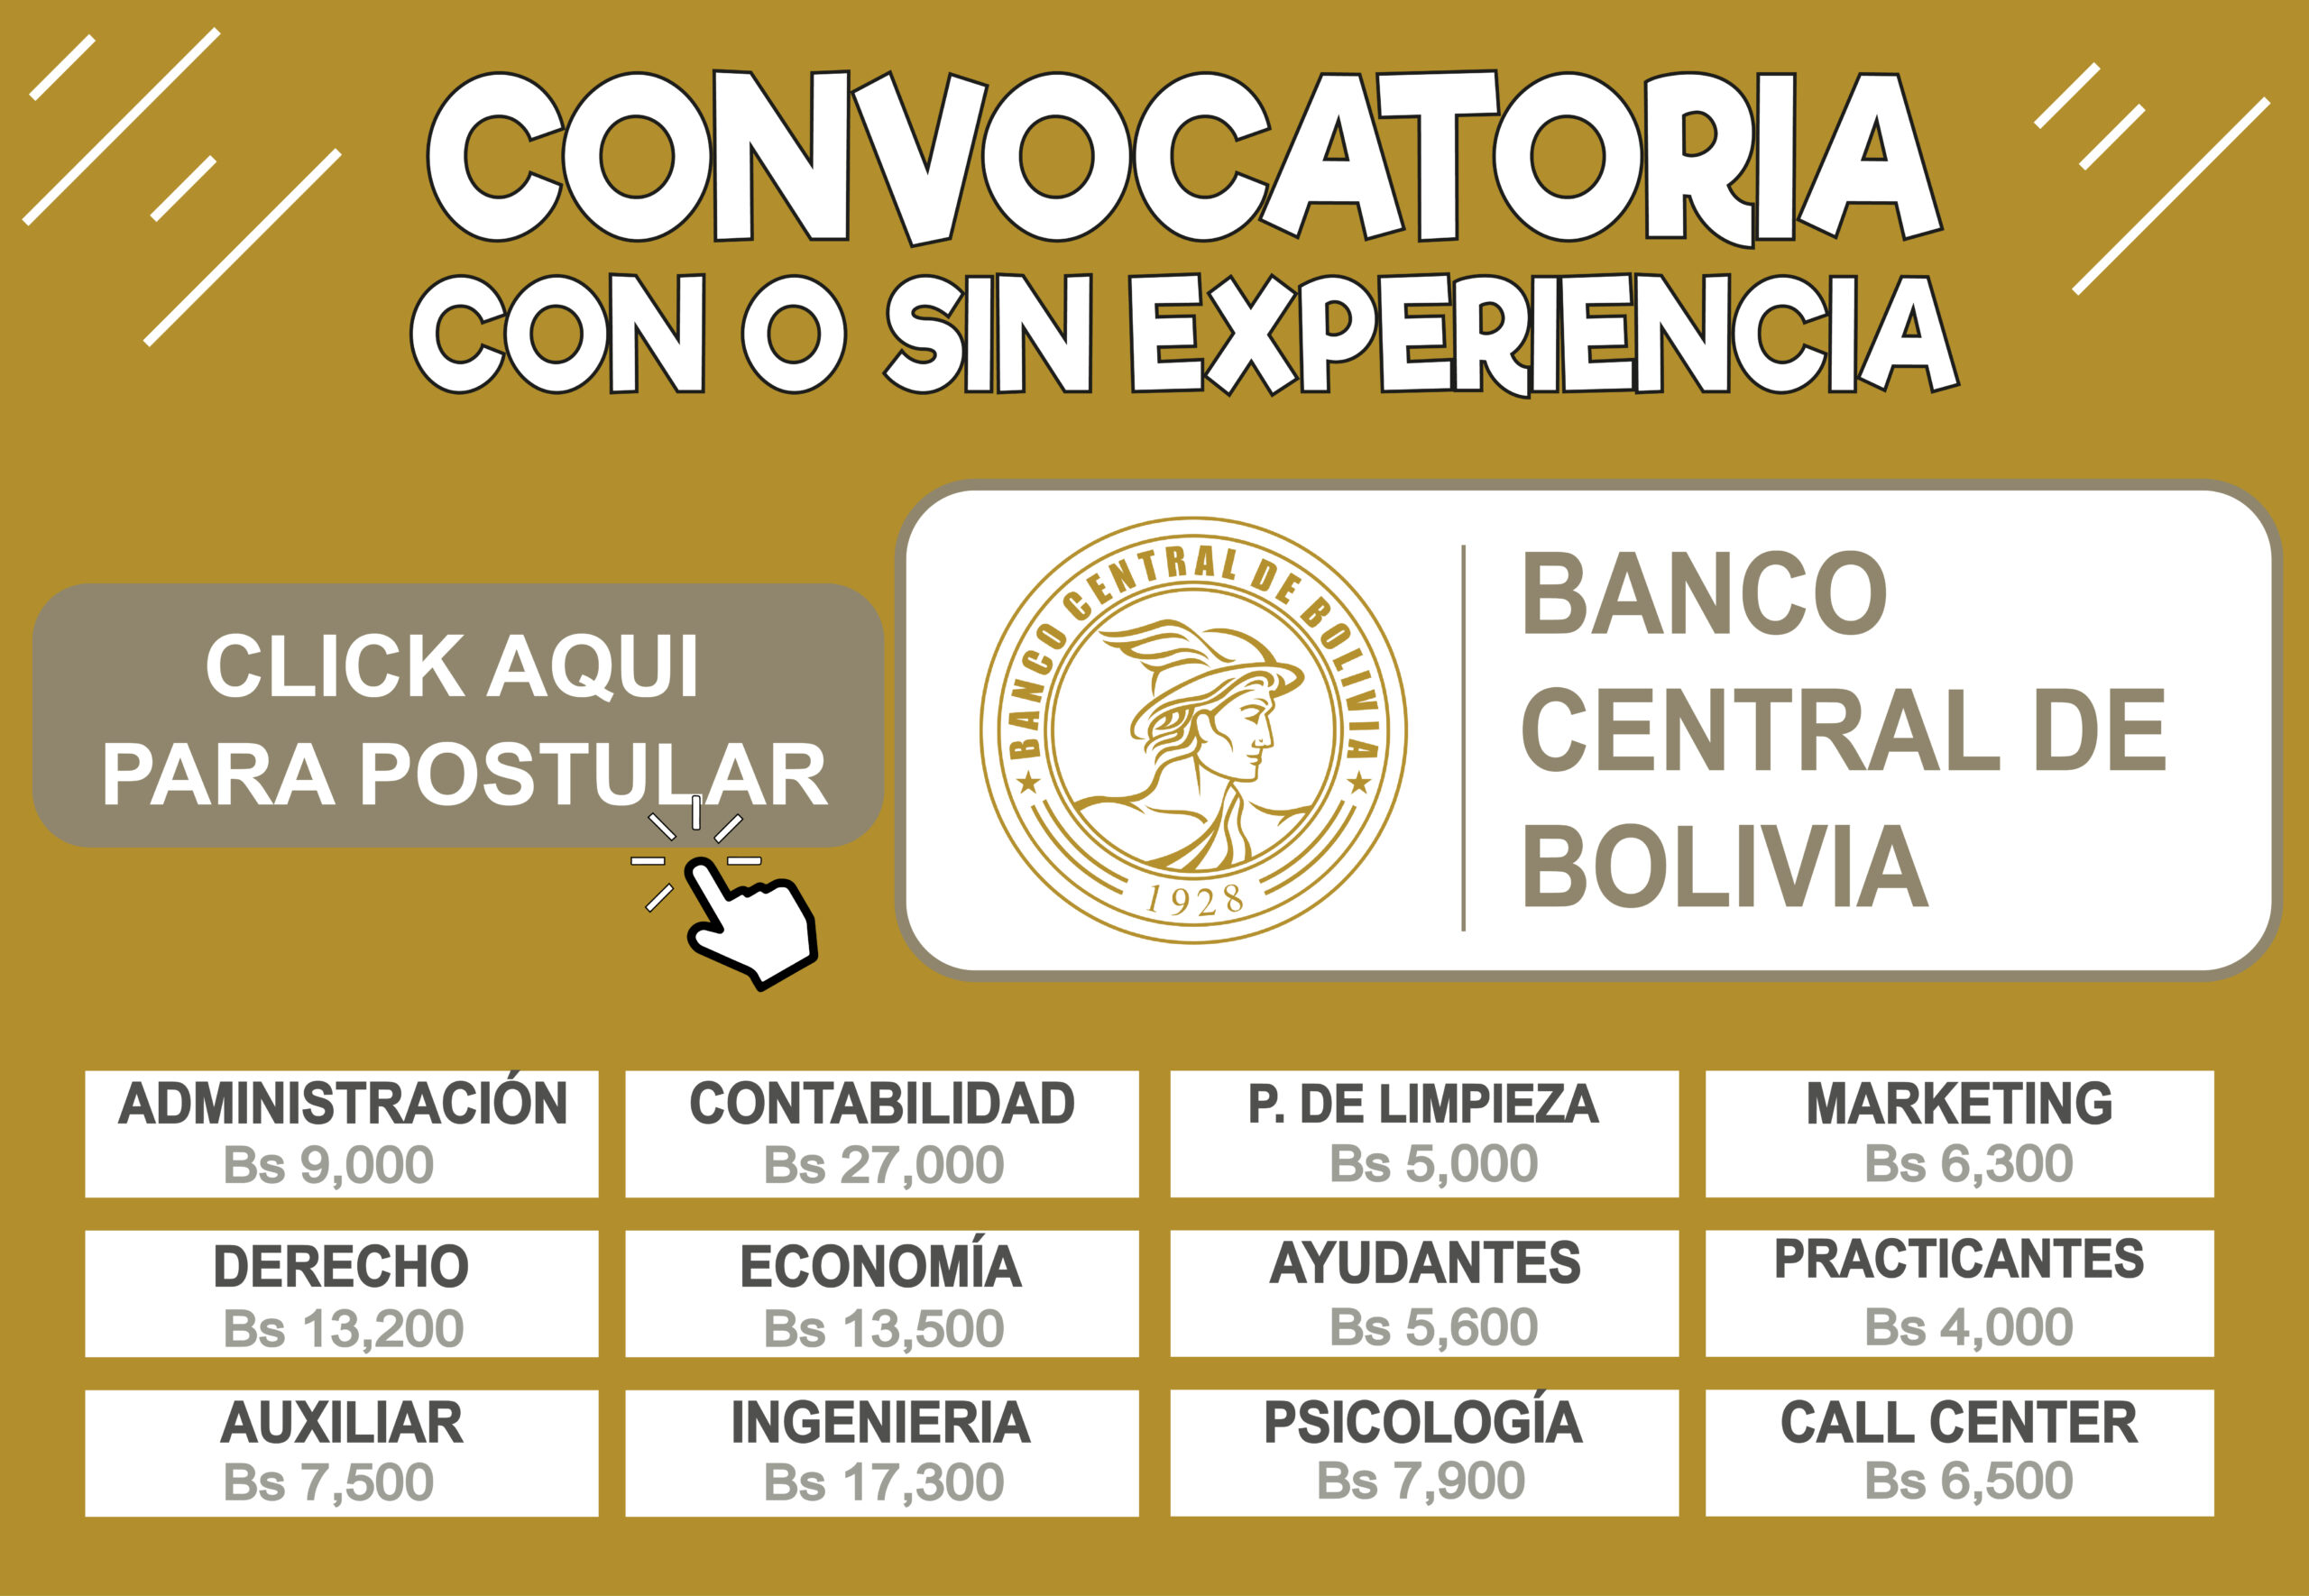 EL BANCO CENTRAL DE BOLIVIA ESTA CONTRATANDO PERSONAL PARA TRABAJAR. POSTULA AQUI